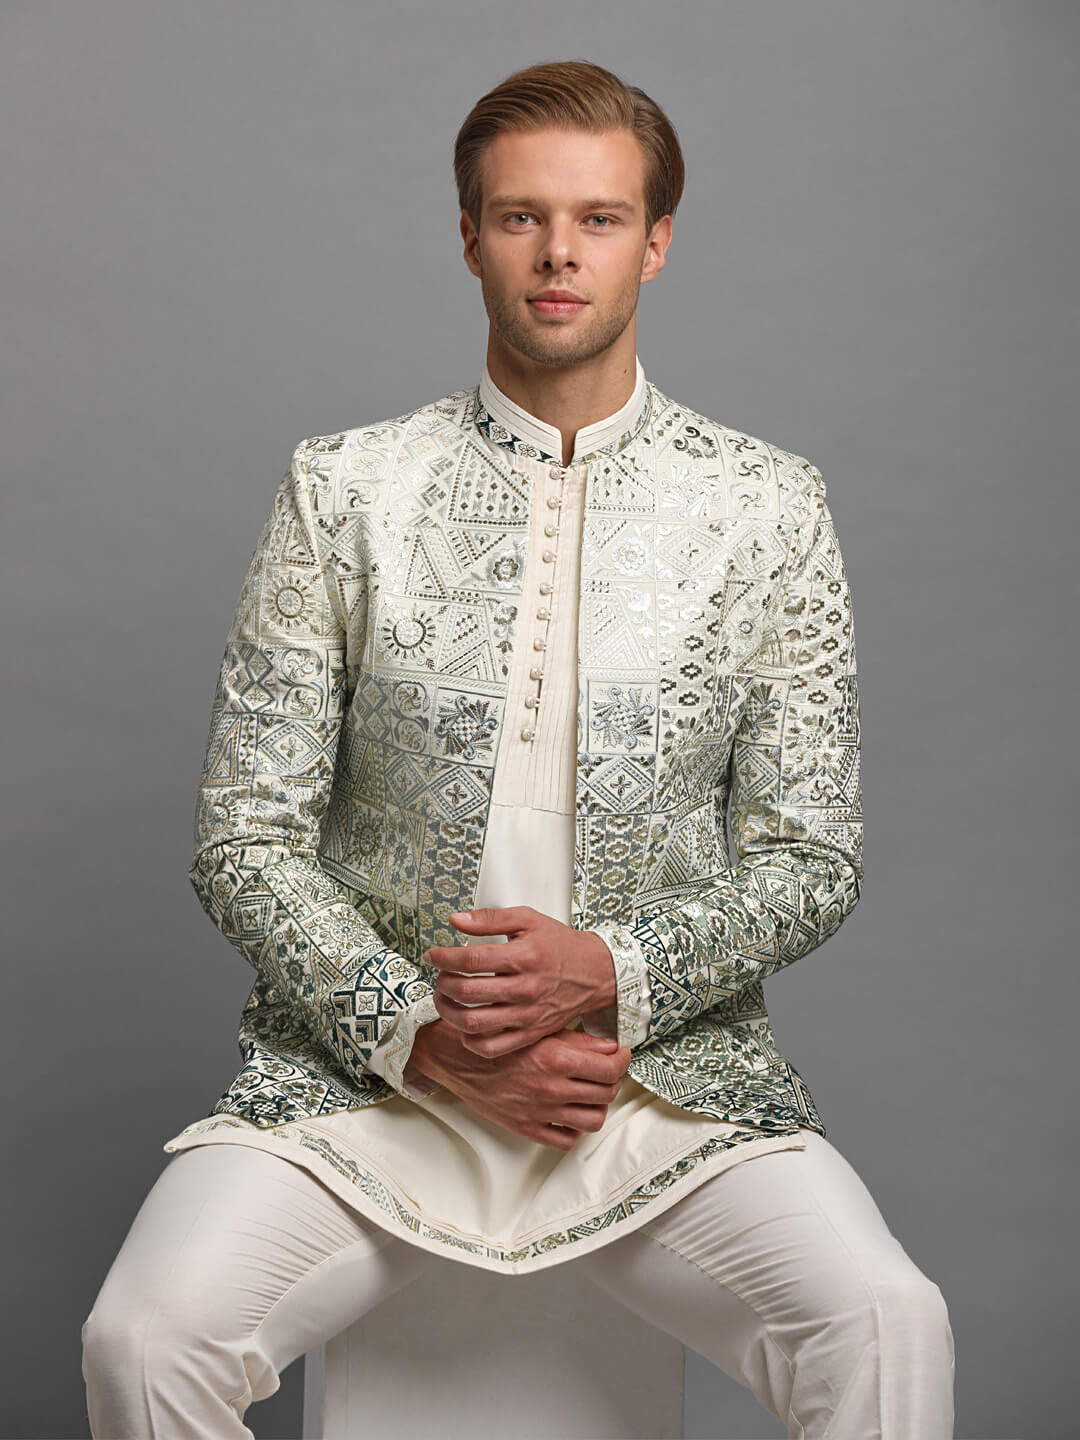 Indian Formal Beige Jacket Style Elegant Jodhpuri Dress Bhandhgala Coat  Marriage Weddings Functions Sangeet Mehendi Cotton Blazer Outfit - Etsy.de  | Men suit wedding, Beige jacket, Achkan